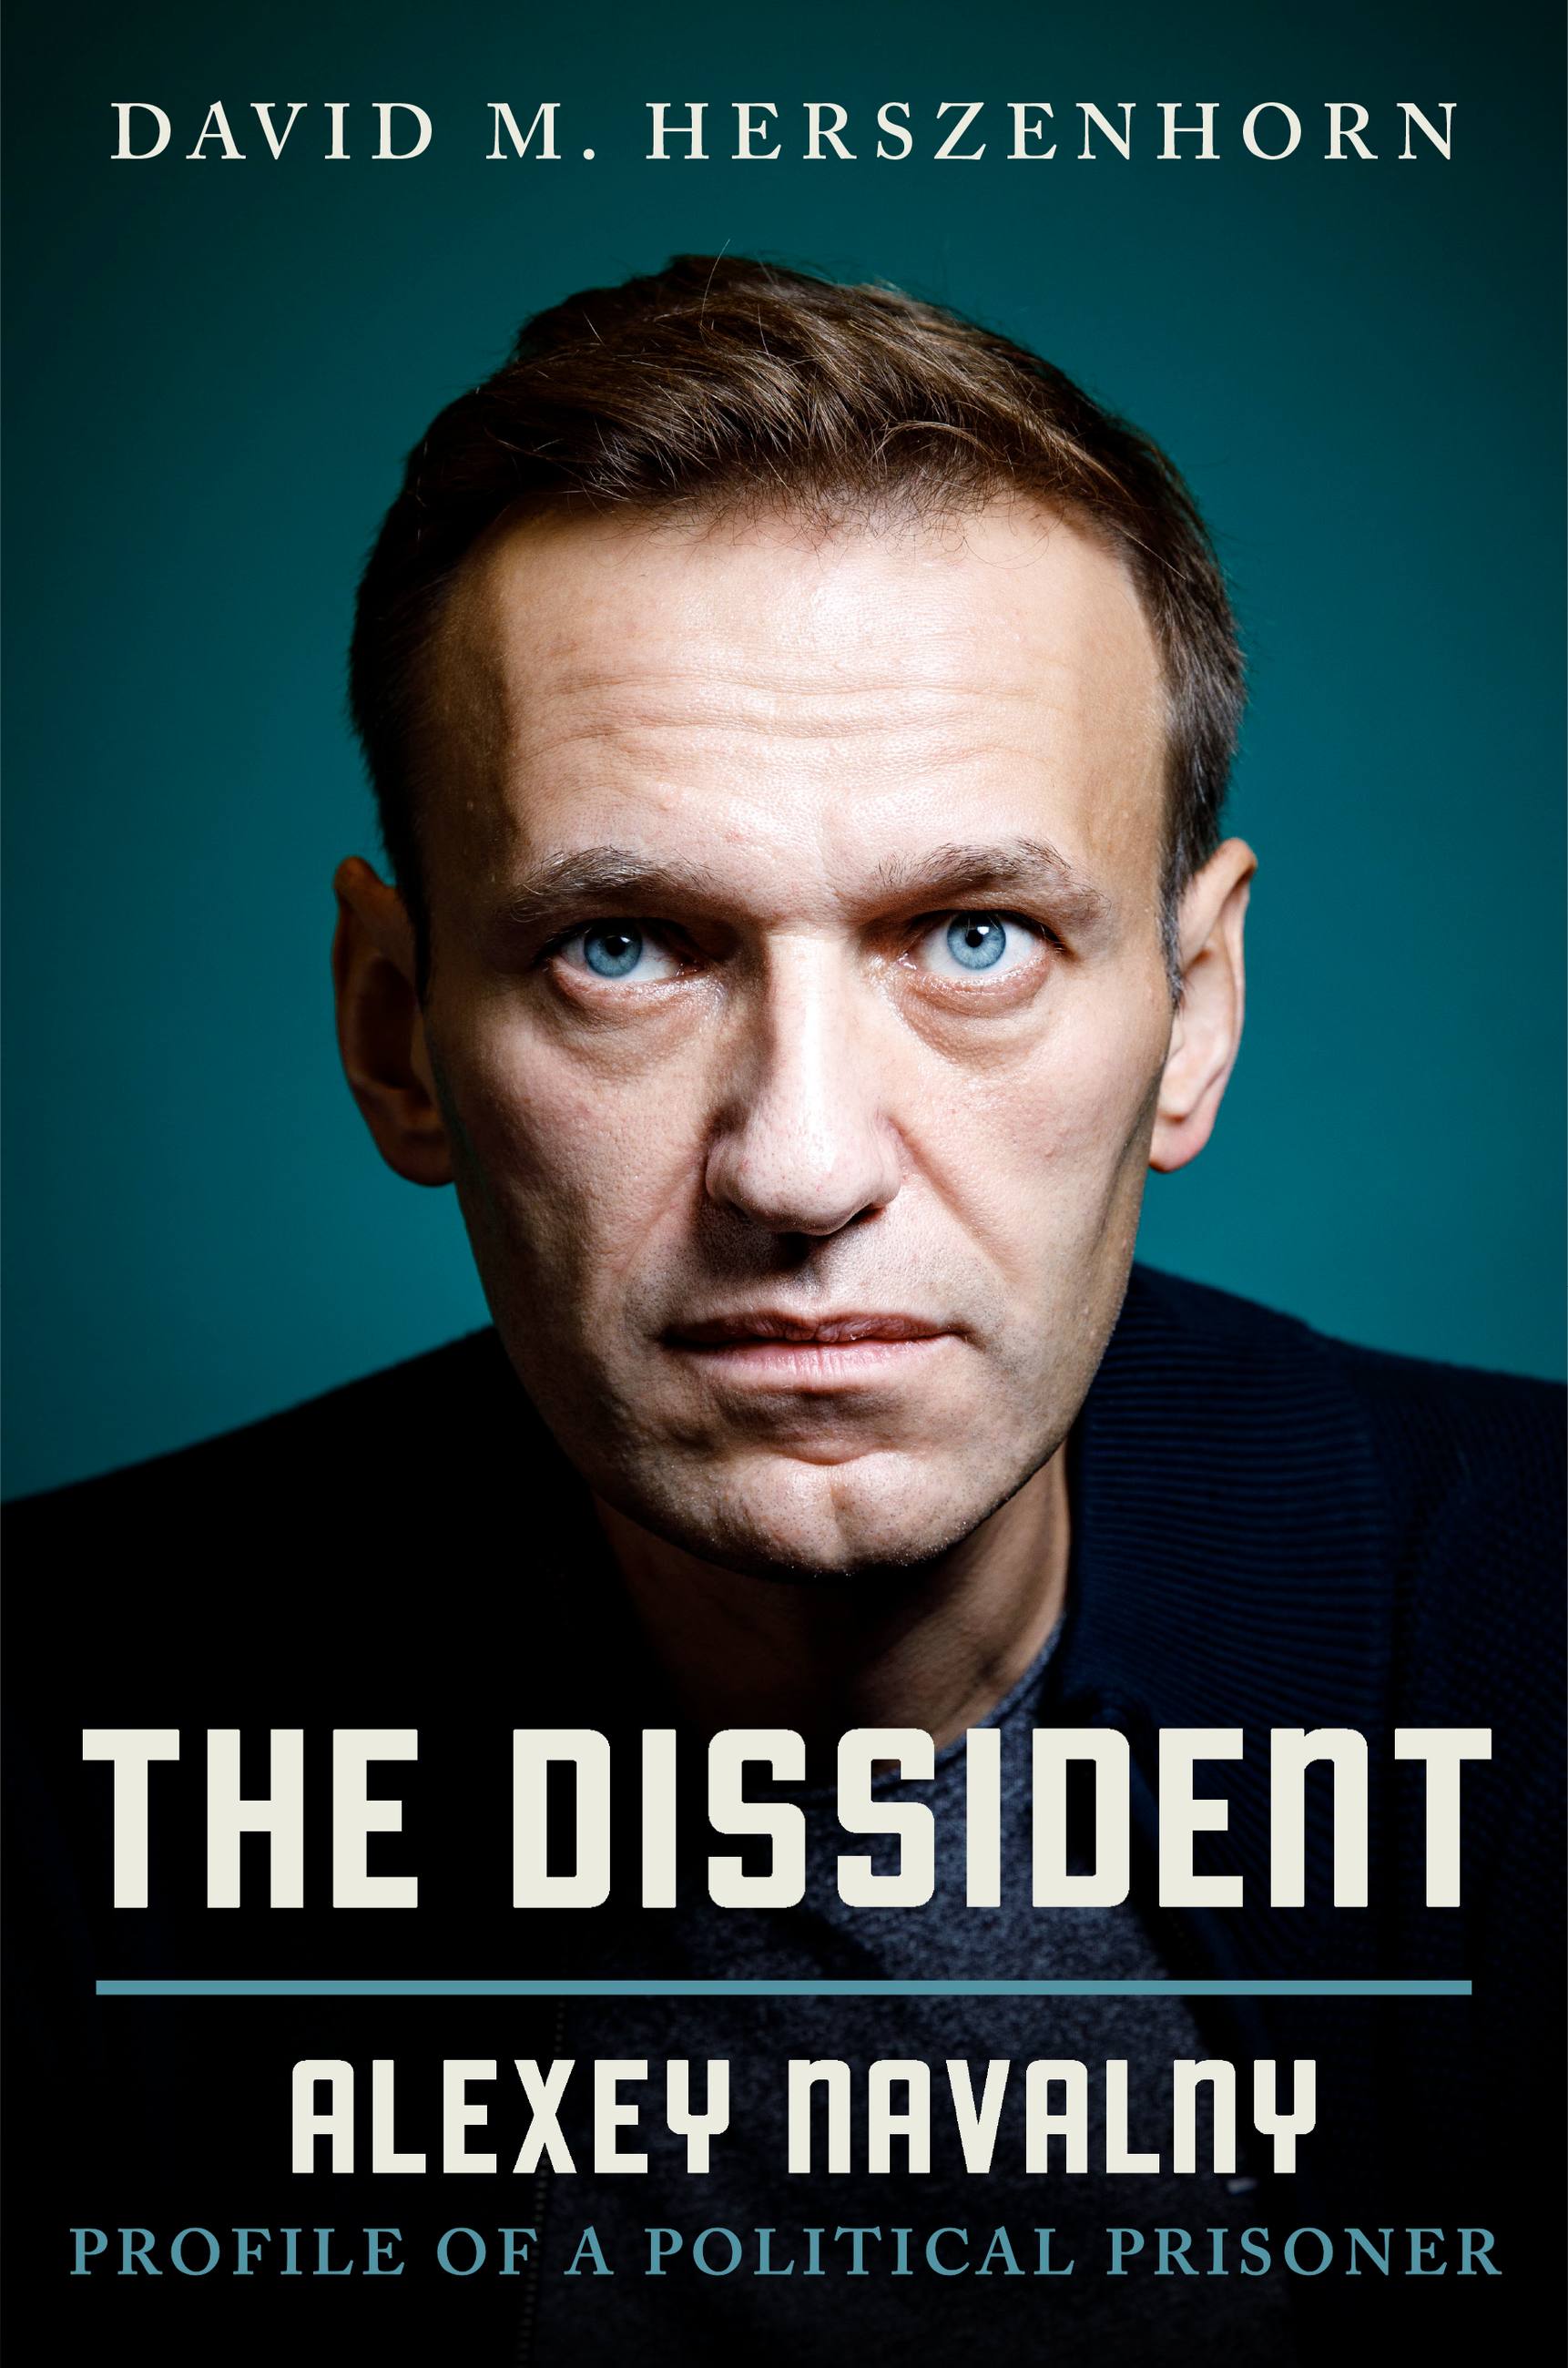 The　Herszenhorn　Dissident　David　by　Hachette　Book　Group